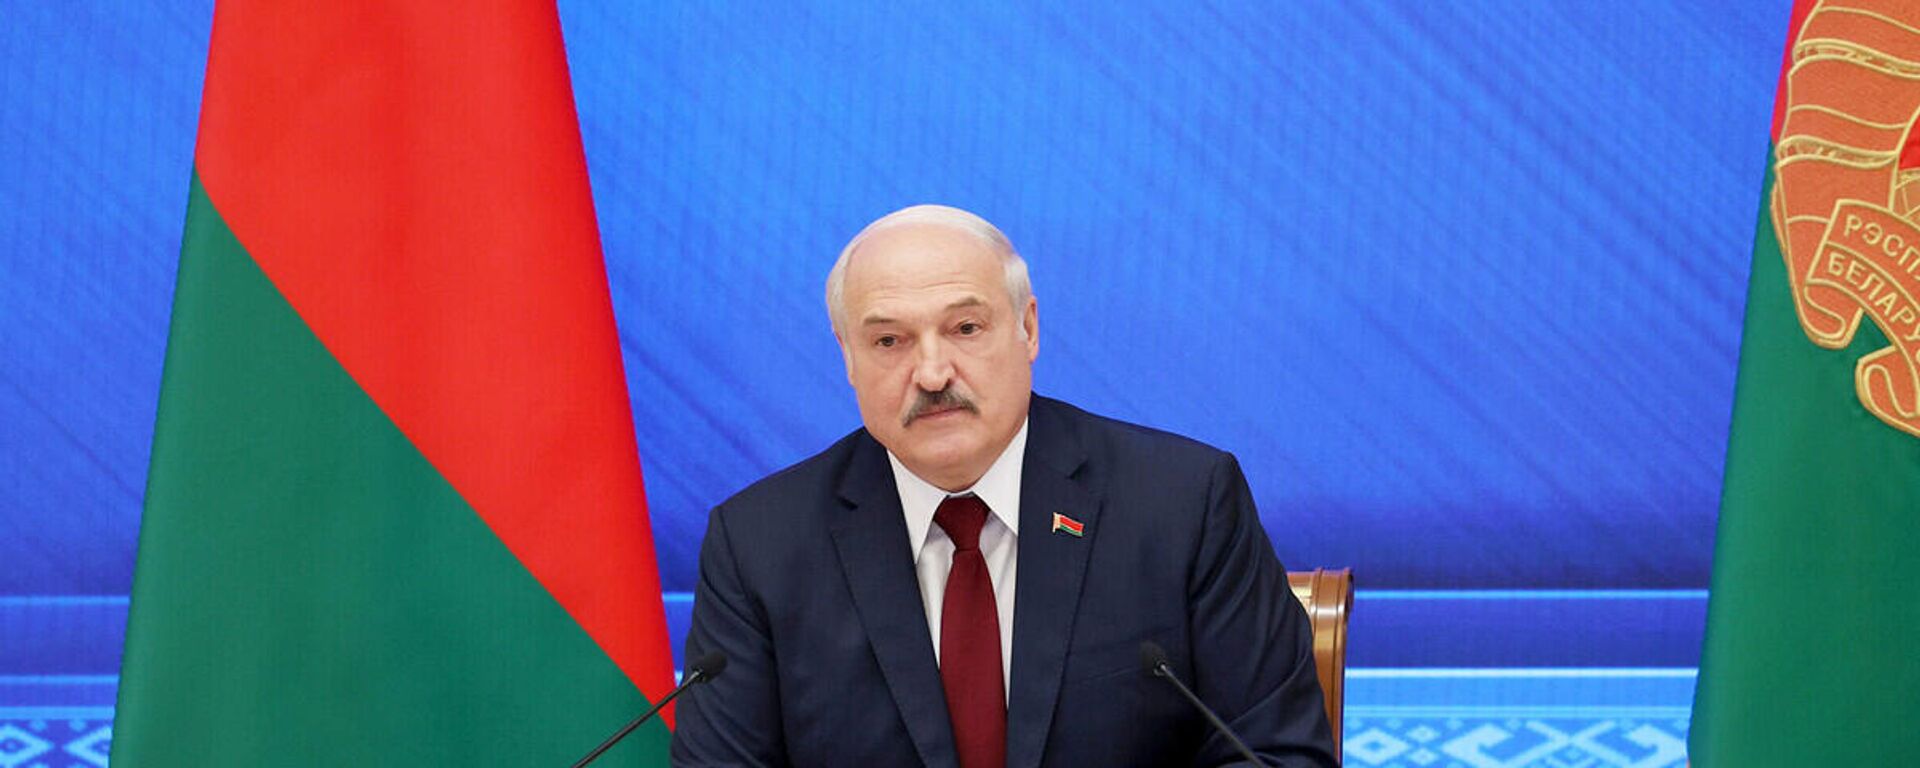 Baltarusijos prezidentas Aleksandras Lukašenka - Sputnik Lietuva, 1920, 09.08.2021